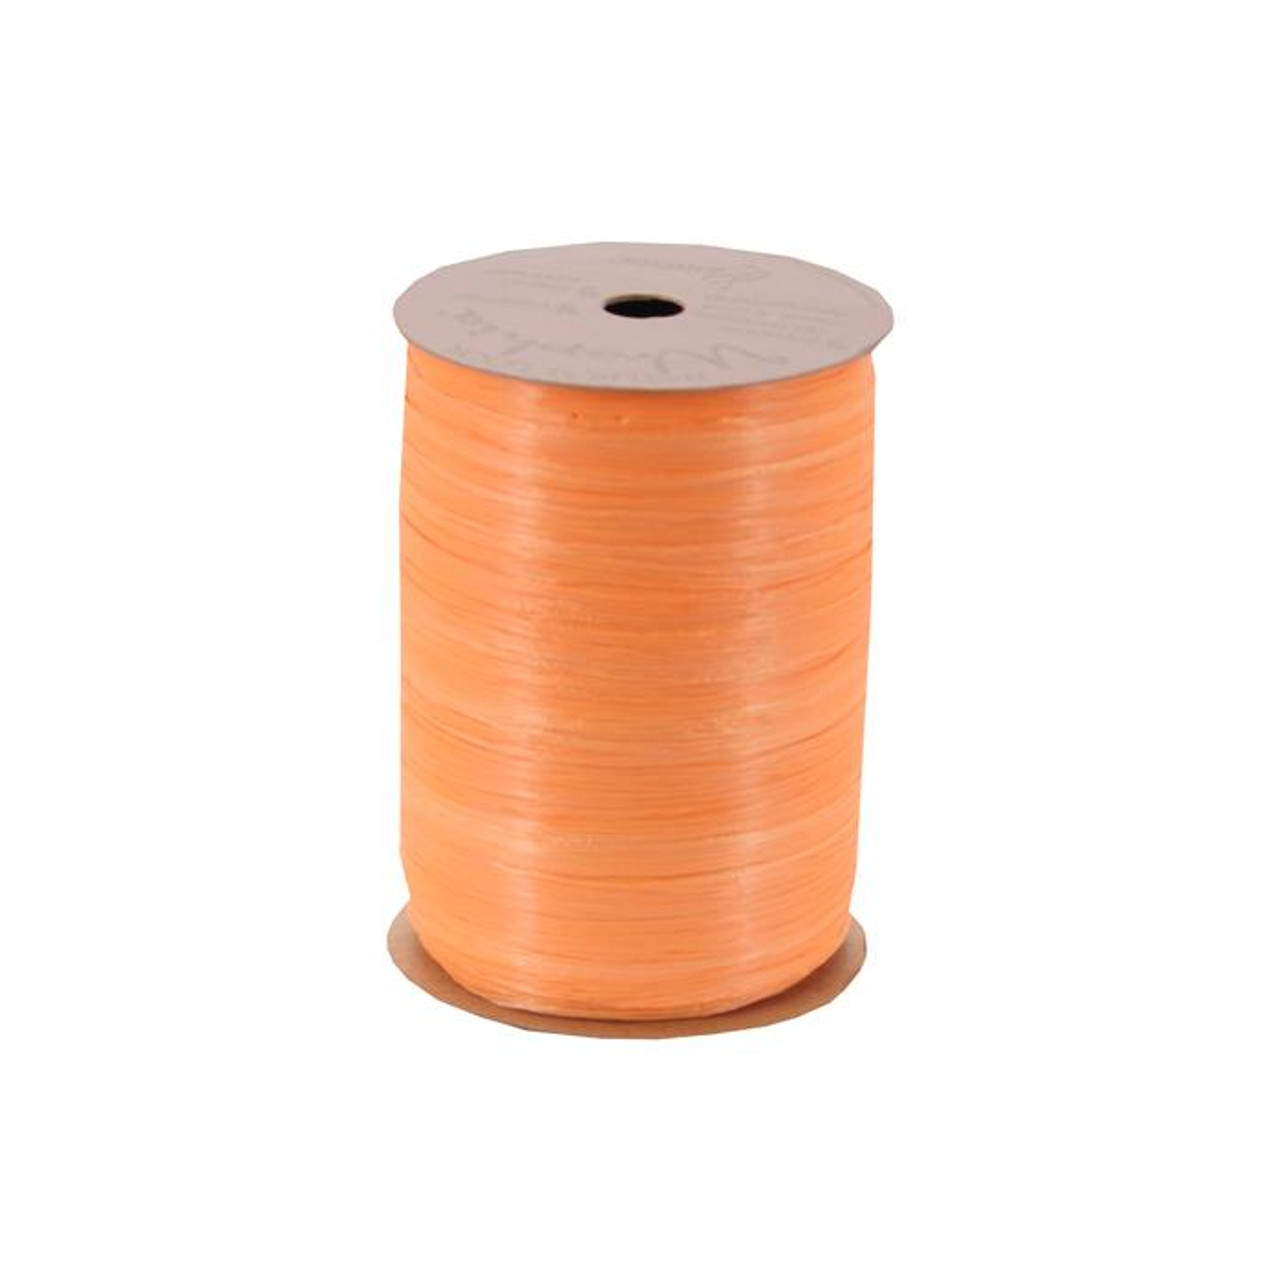 Berwick Orange Wraphia Ribbon 100 yds/spool